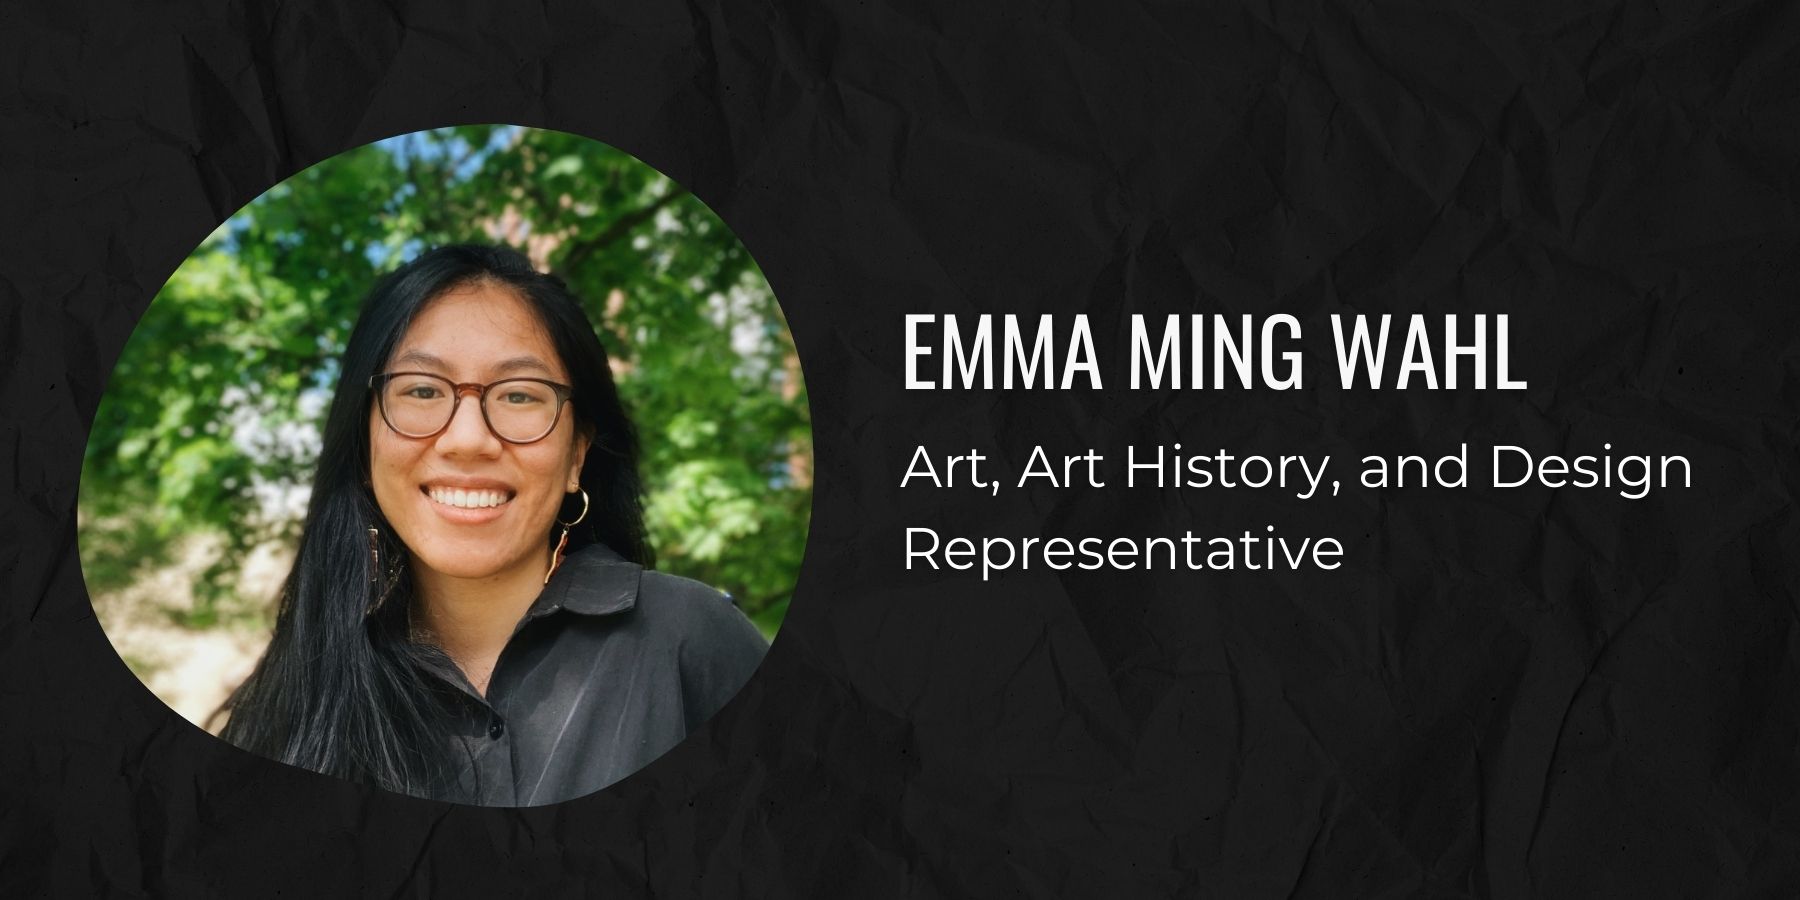 Photo of Emma Wahl and text: Art, Art History, and Design  Representative